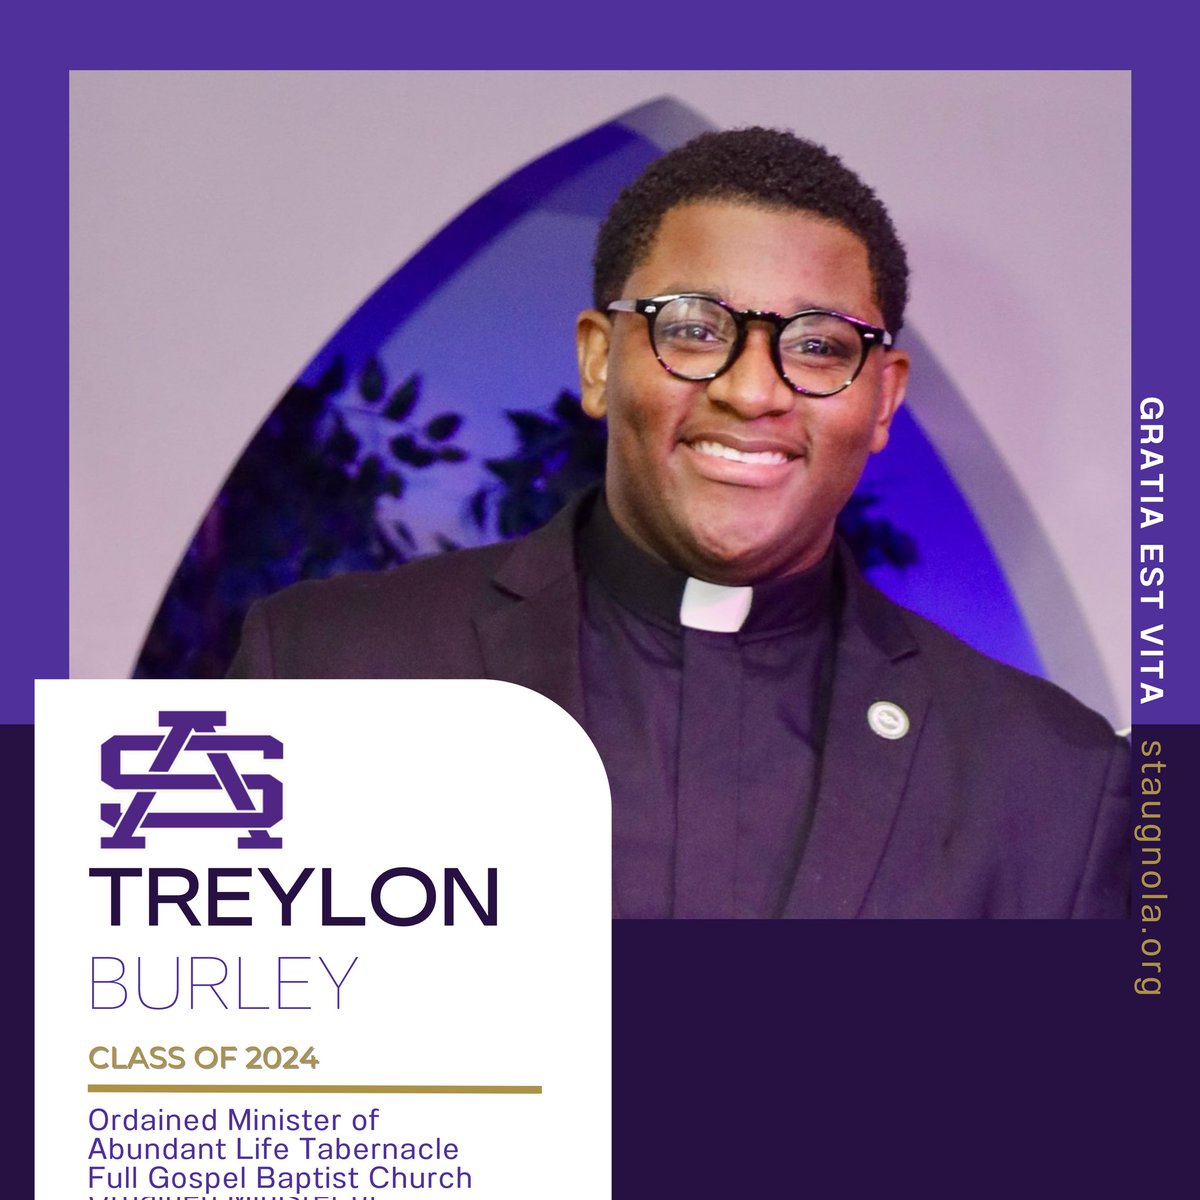 Celebrating senior Treylon Burley's recent ordination as a minister of faith at Abundant Life Tabernacle Full Gospel Baptist Church earlier this month!